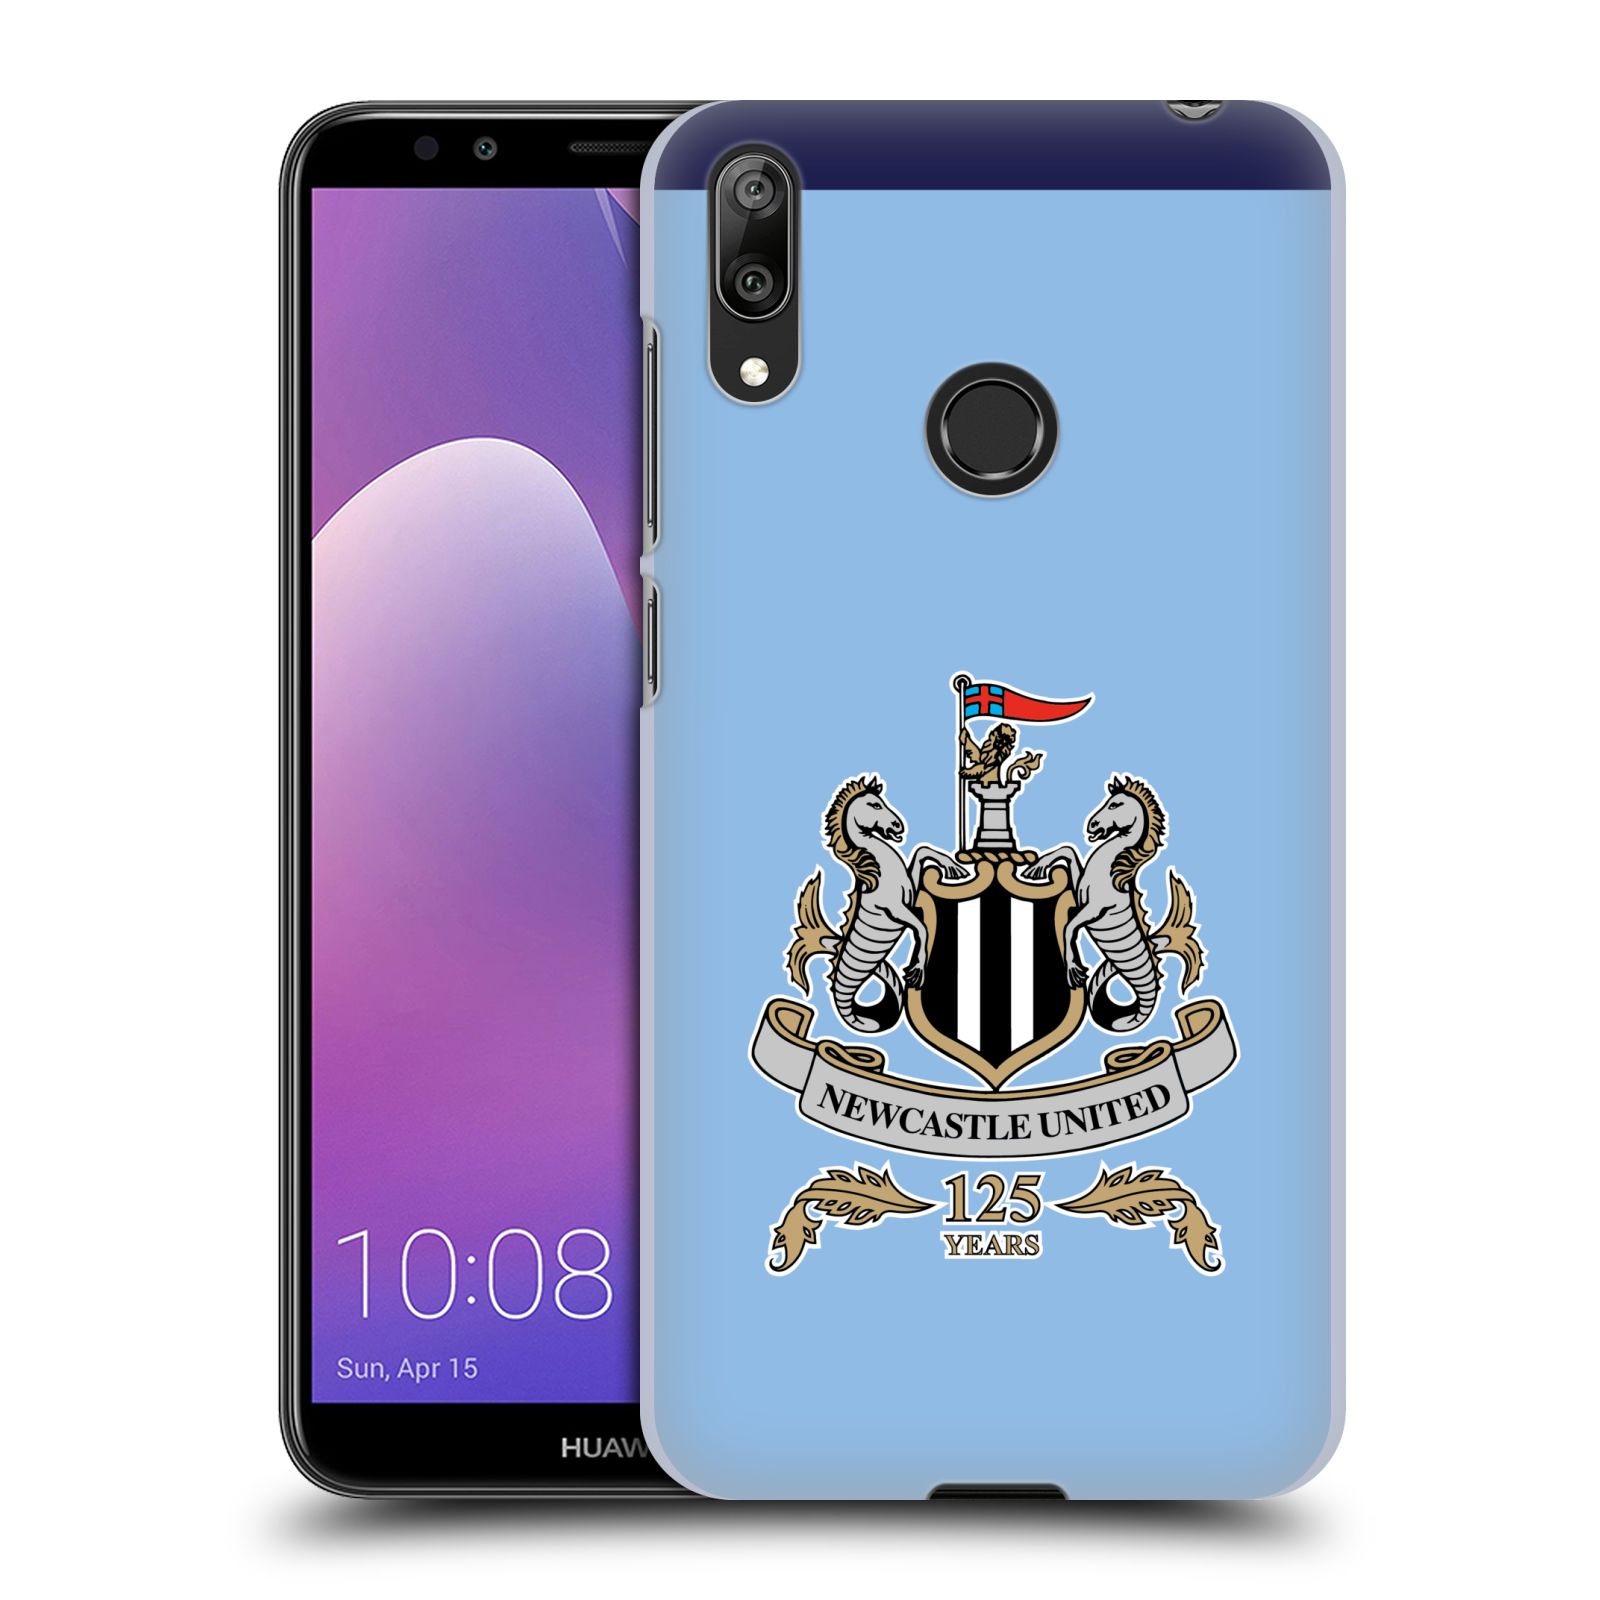 Pouzdro na mobil Huawei Y7 2019 - Head Case - Fotbalový klub Newcastle United FC velký znak na modrém pozadí